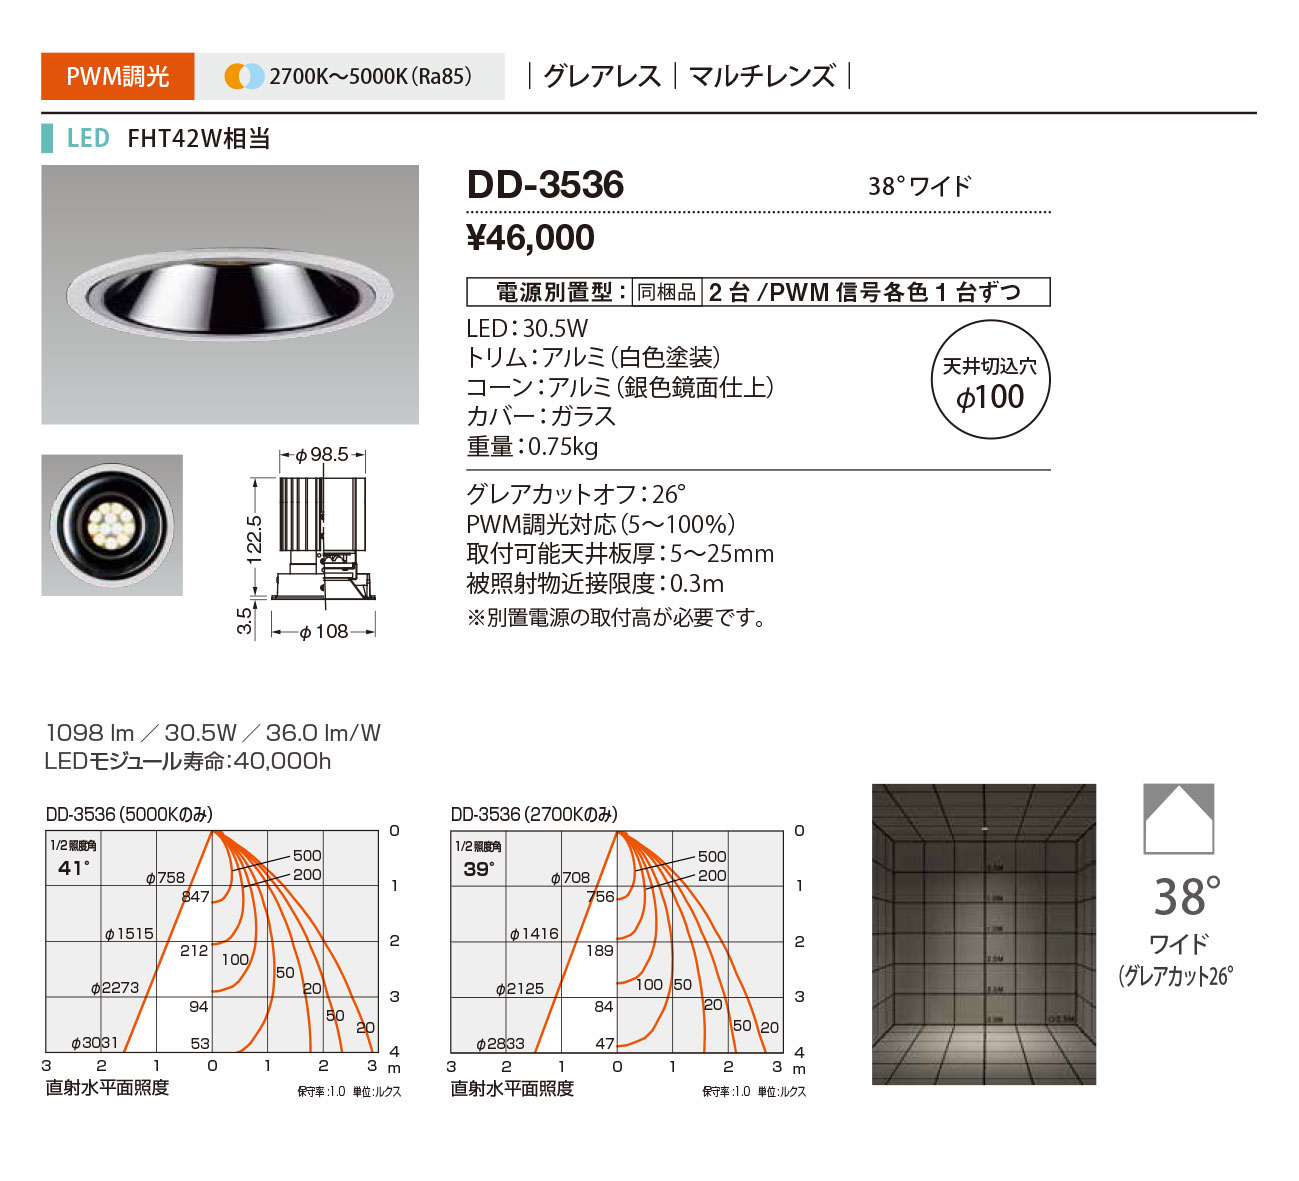 DD-3536 RcƖ p_ECg F 100 LED F  38x